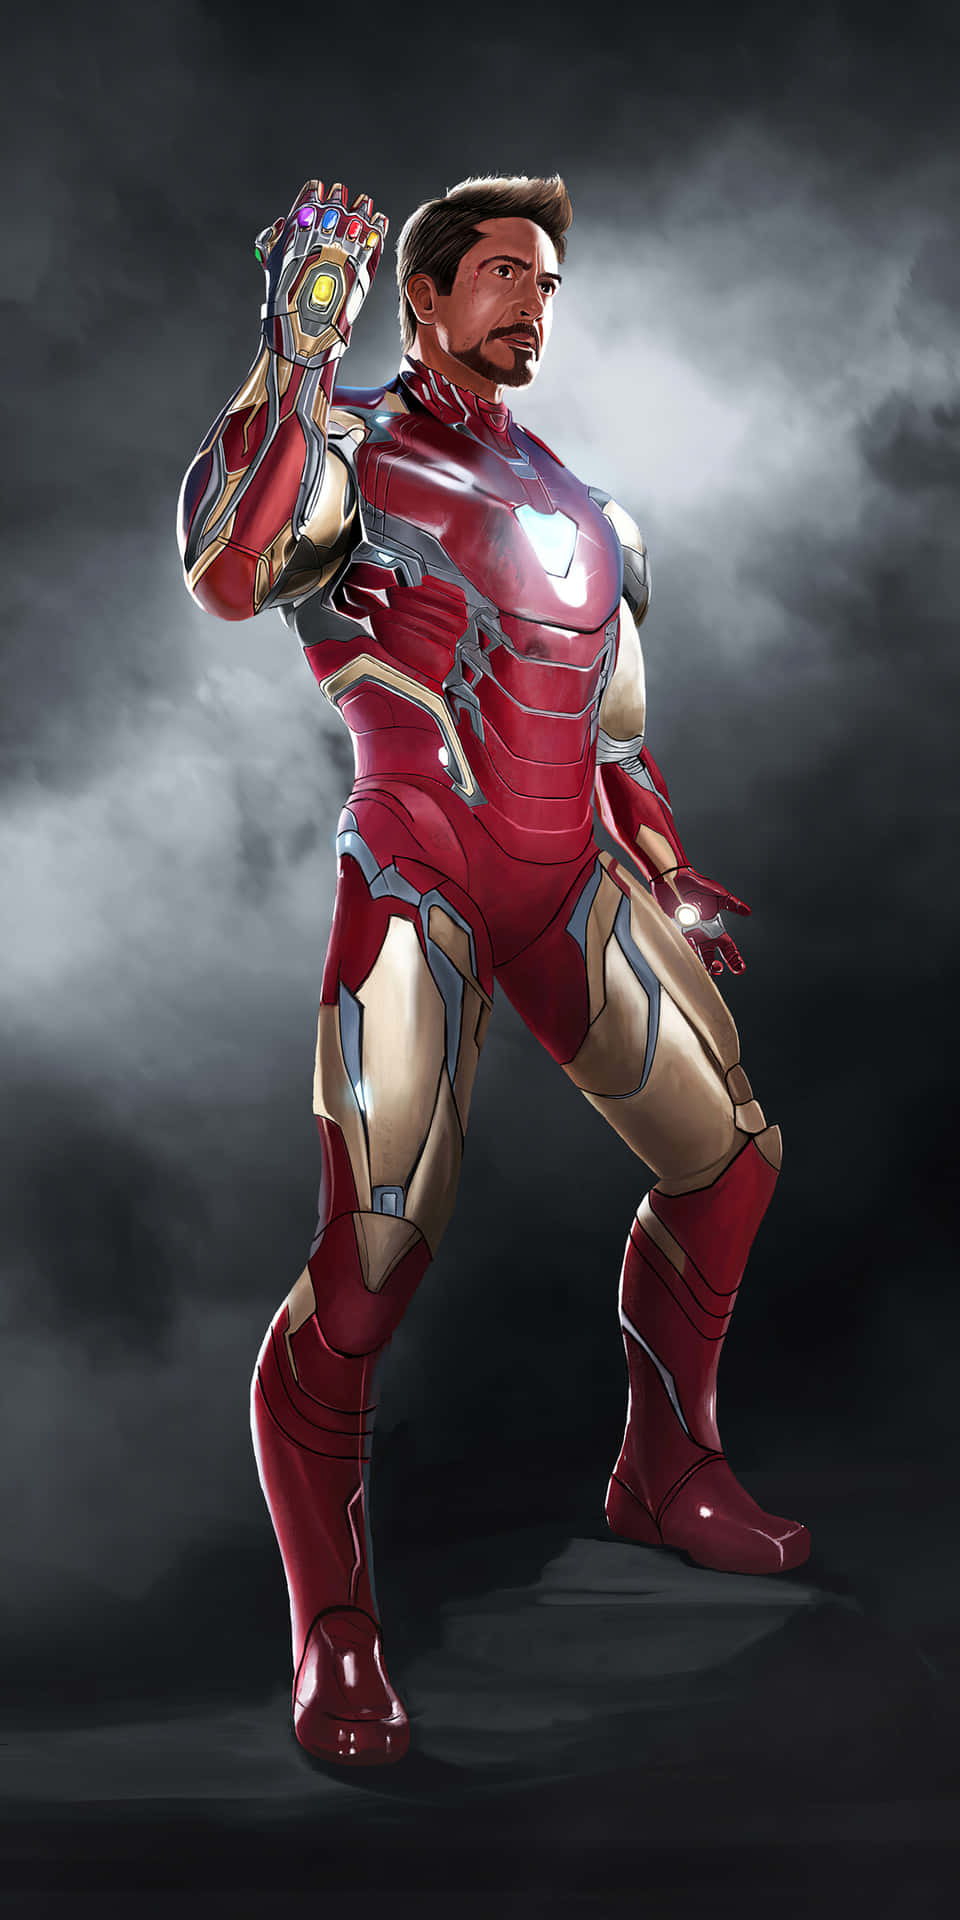 Pixel3 Iron Man Endgame Bakgrundsbild.